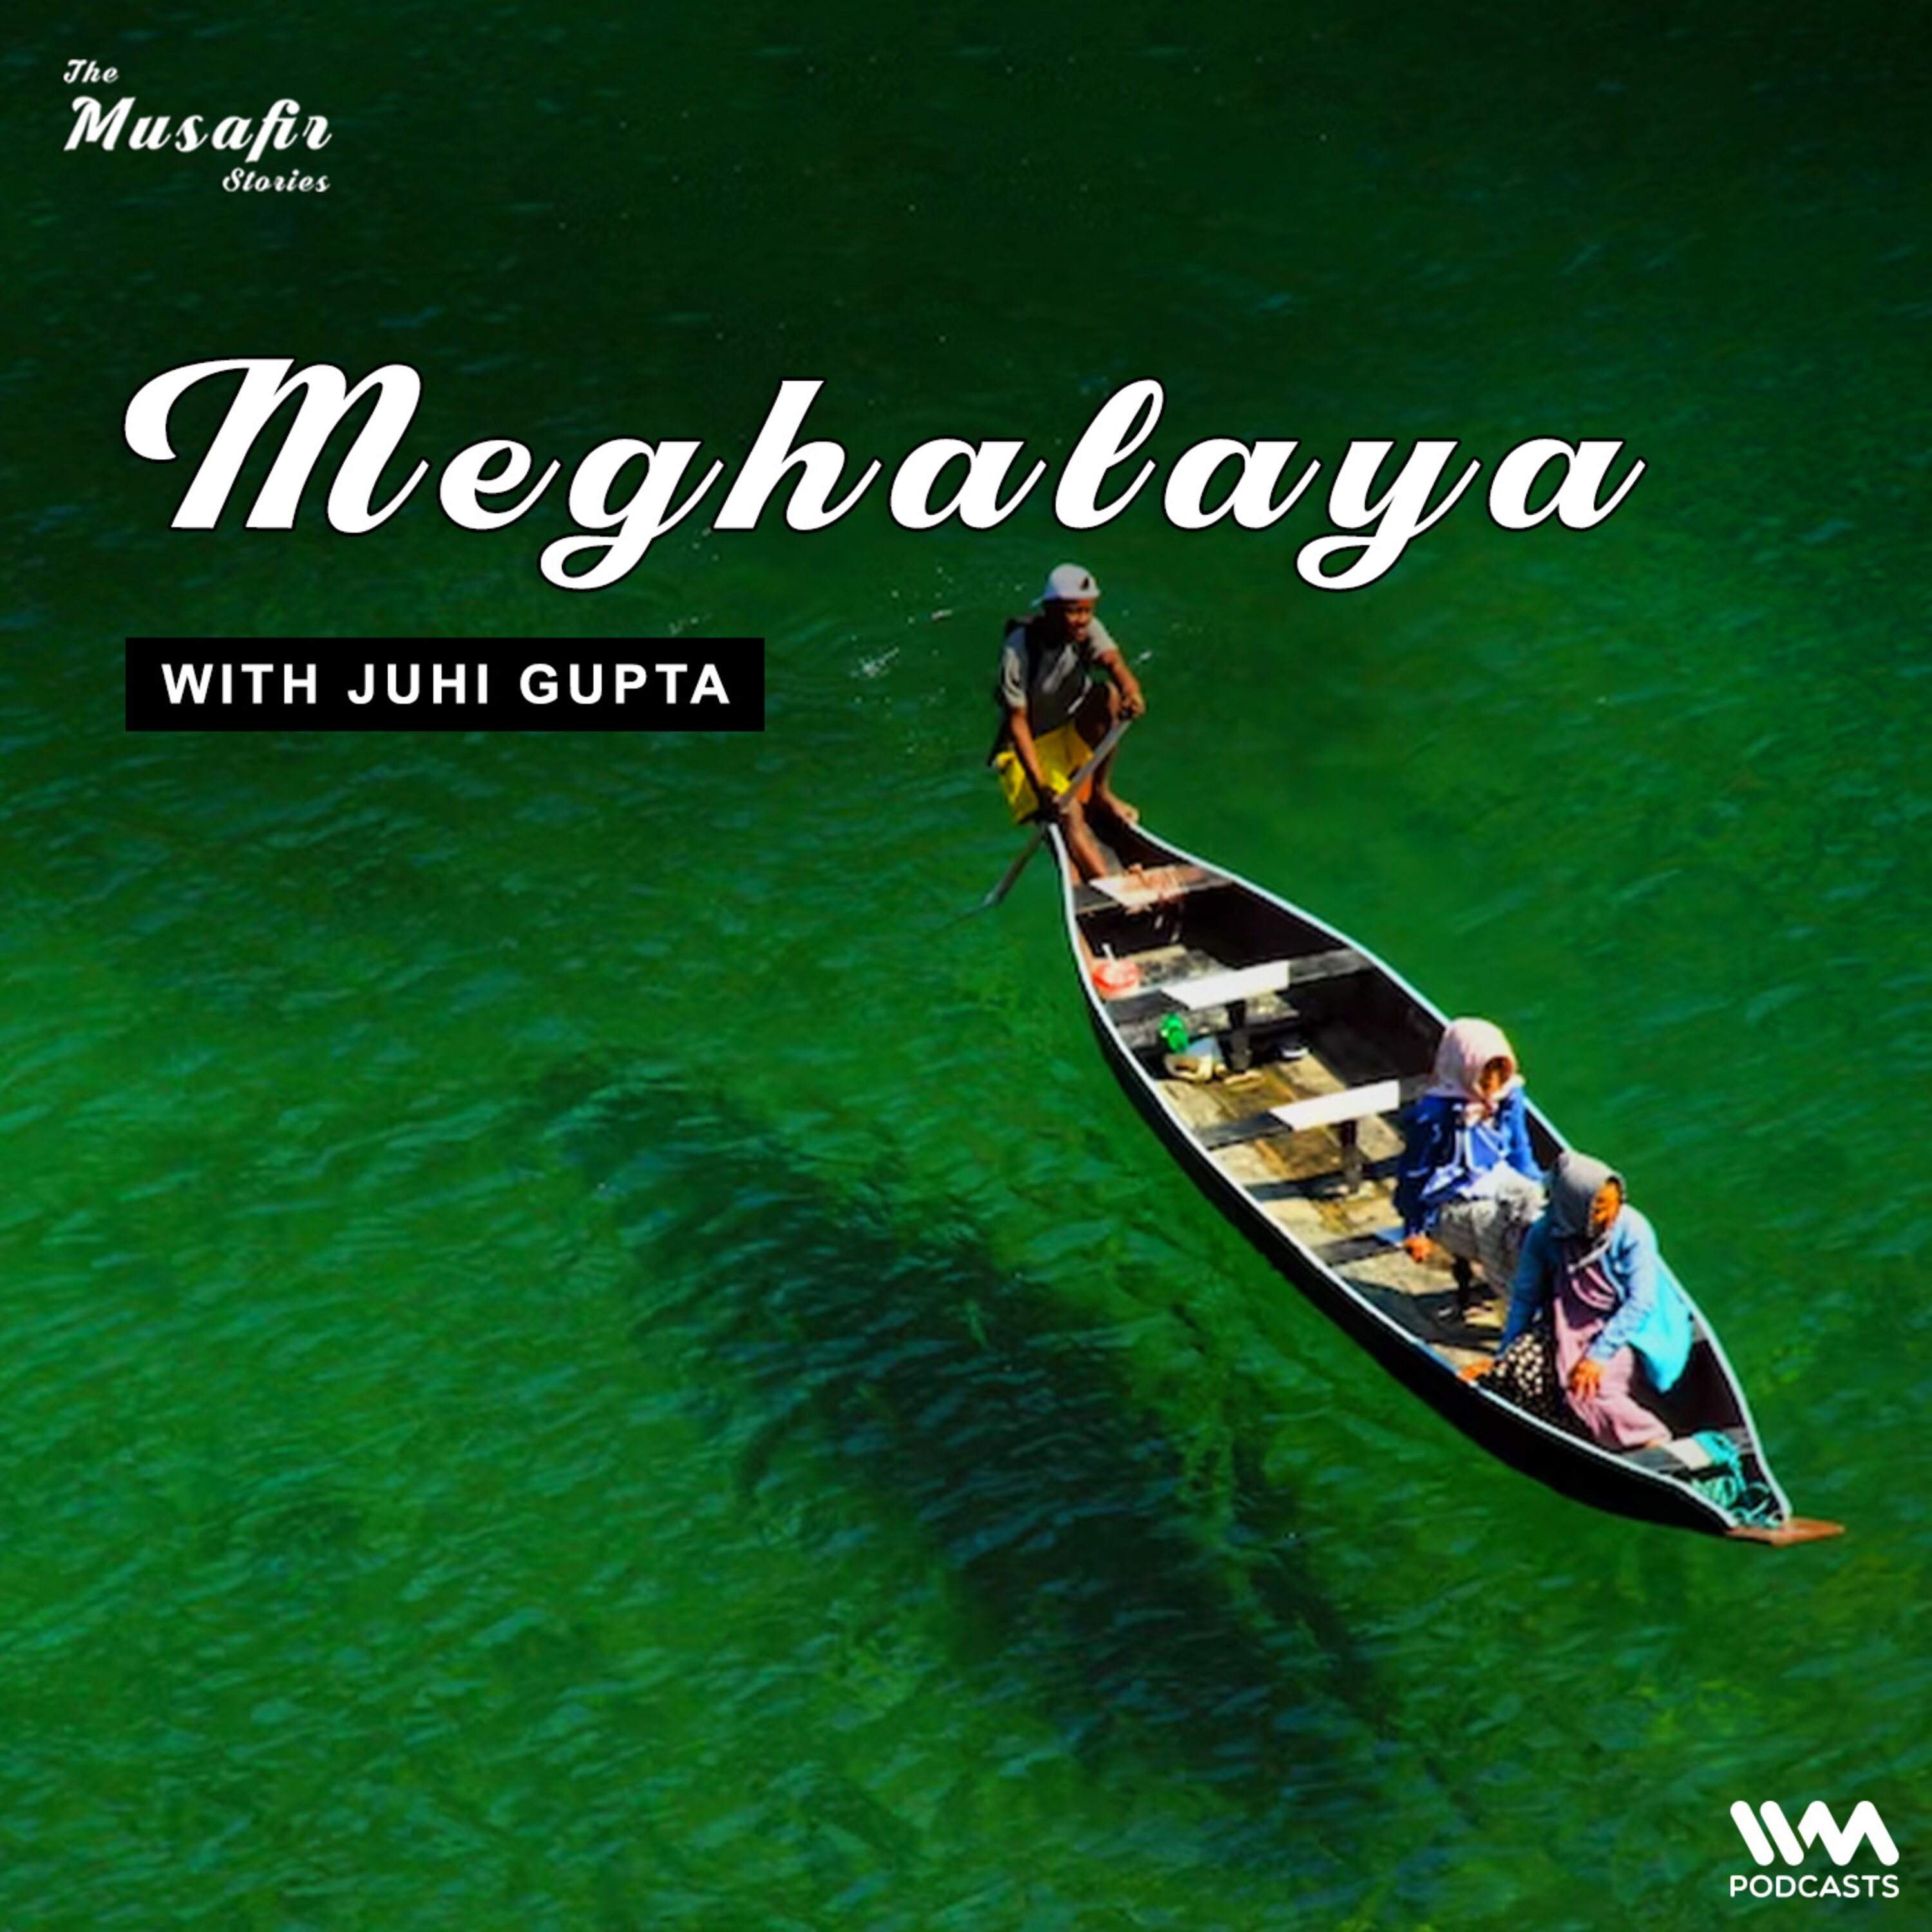 Meghalaya with Juhi Gupta